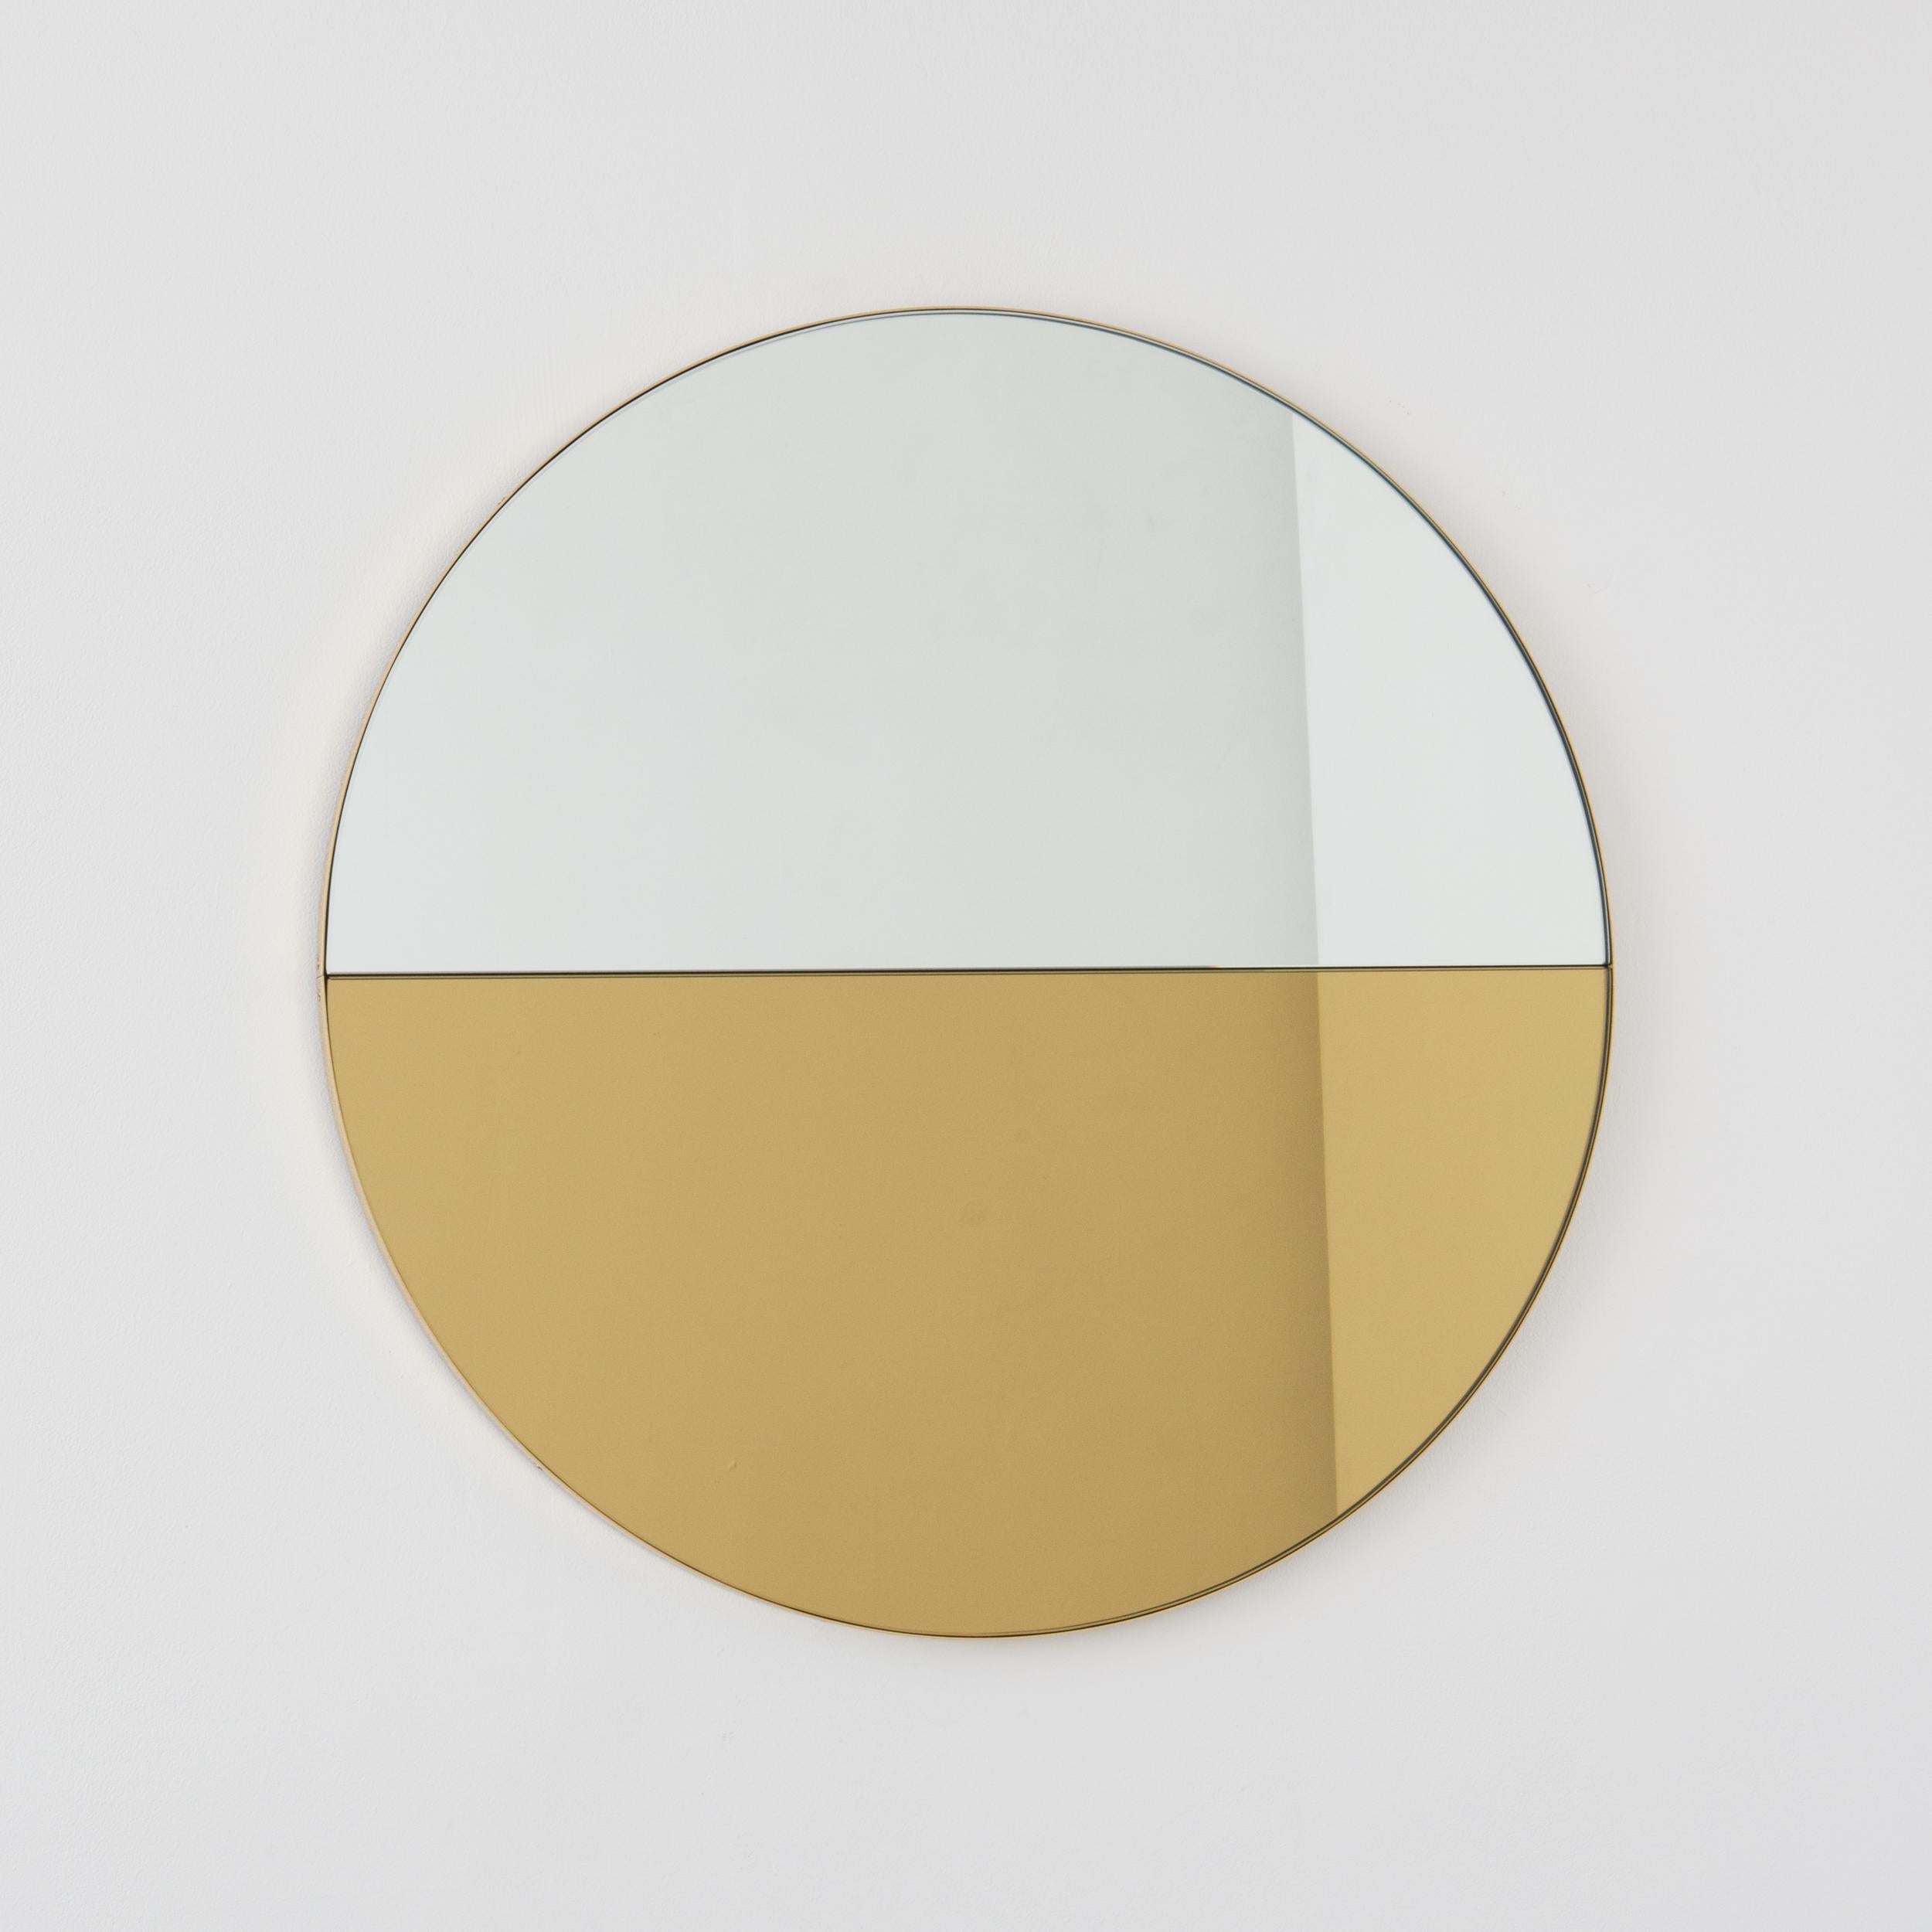 British In Stock Orbis Dualis Round Gold Silver Tinted Mirror, Brass Frame, Medium For Sale